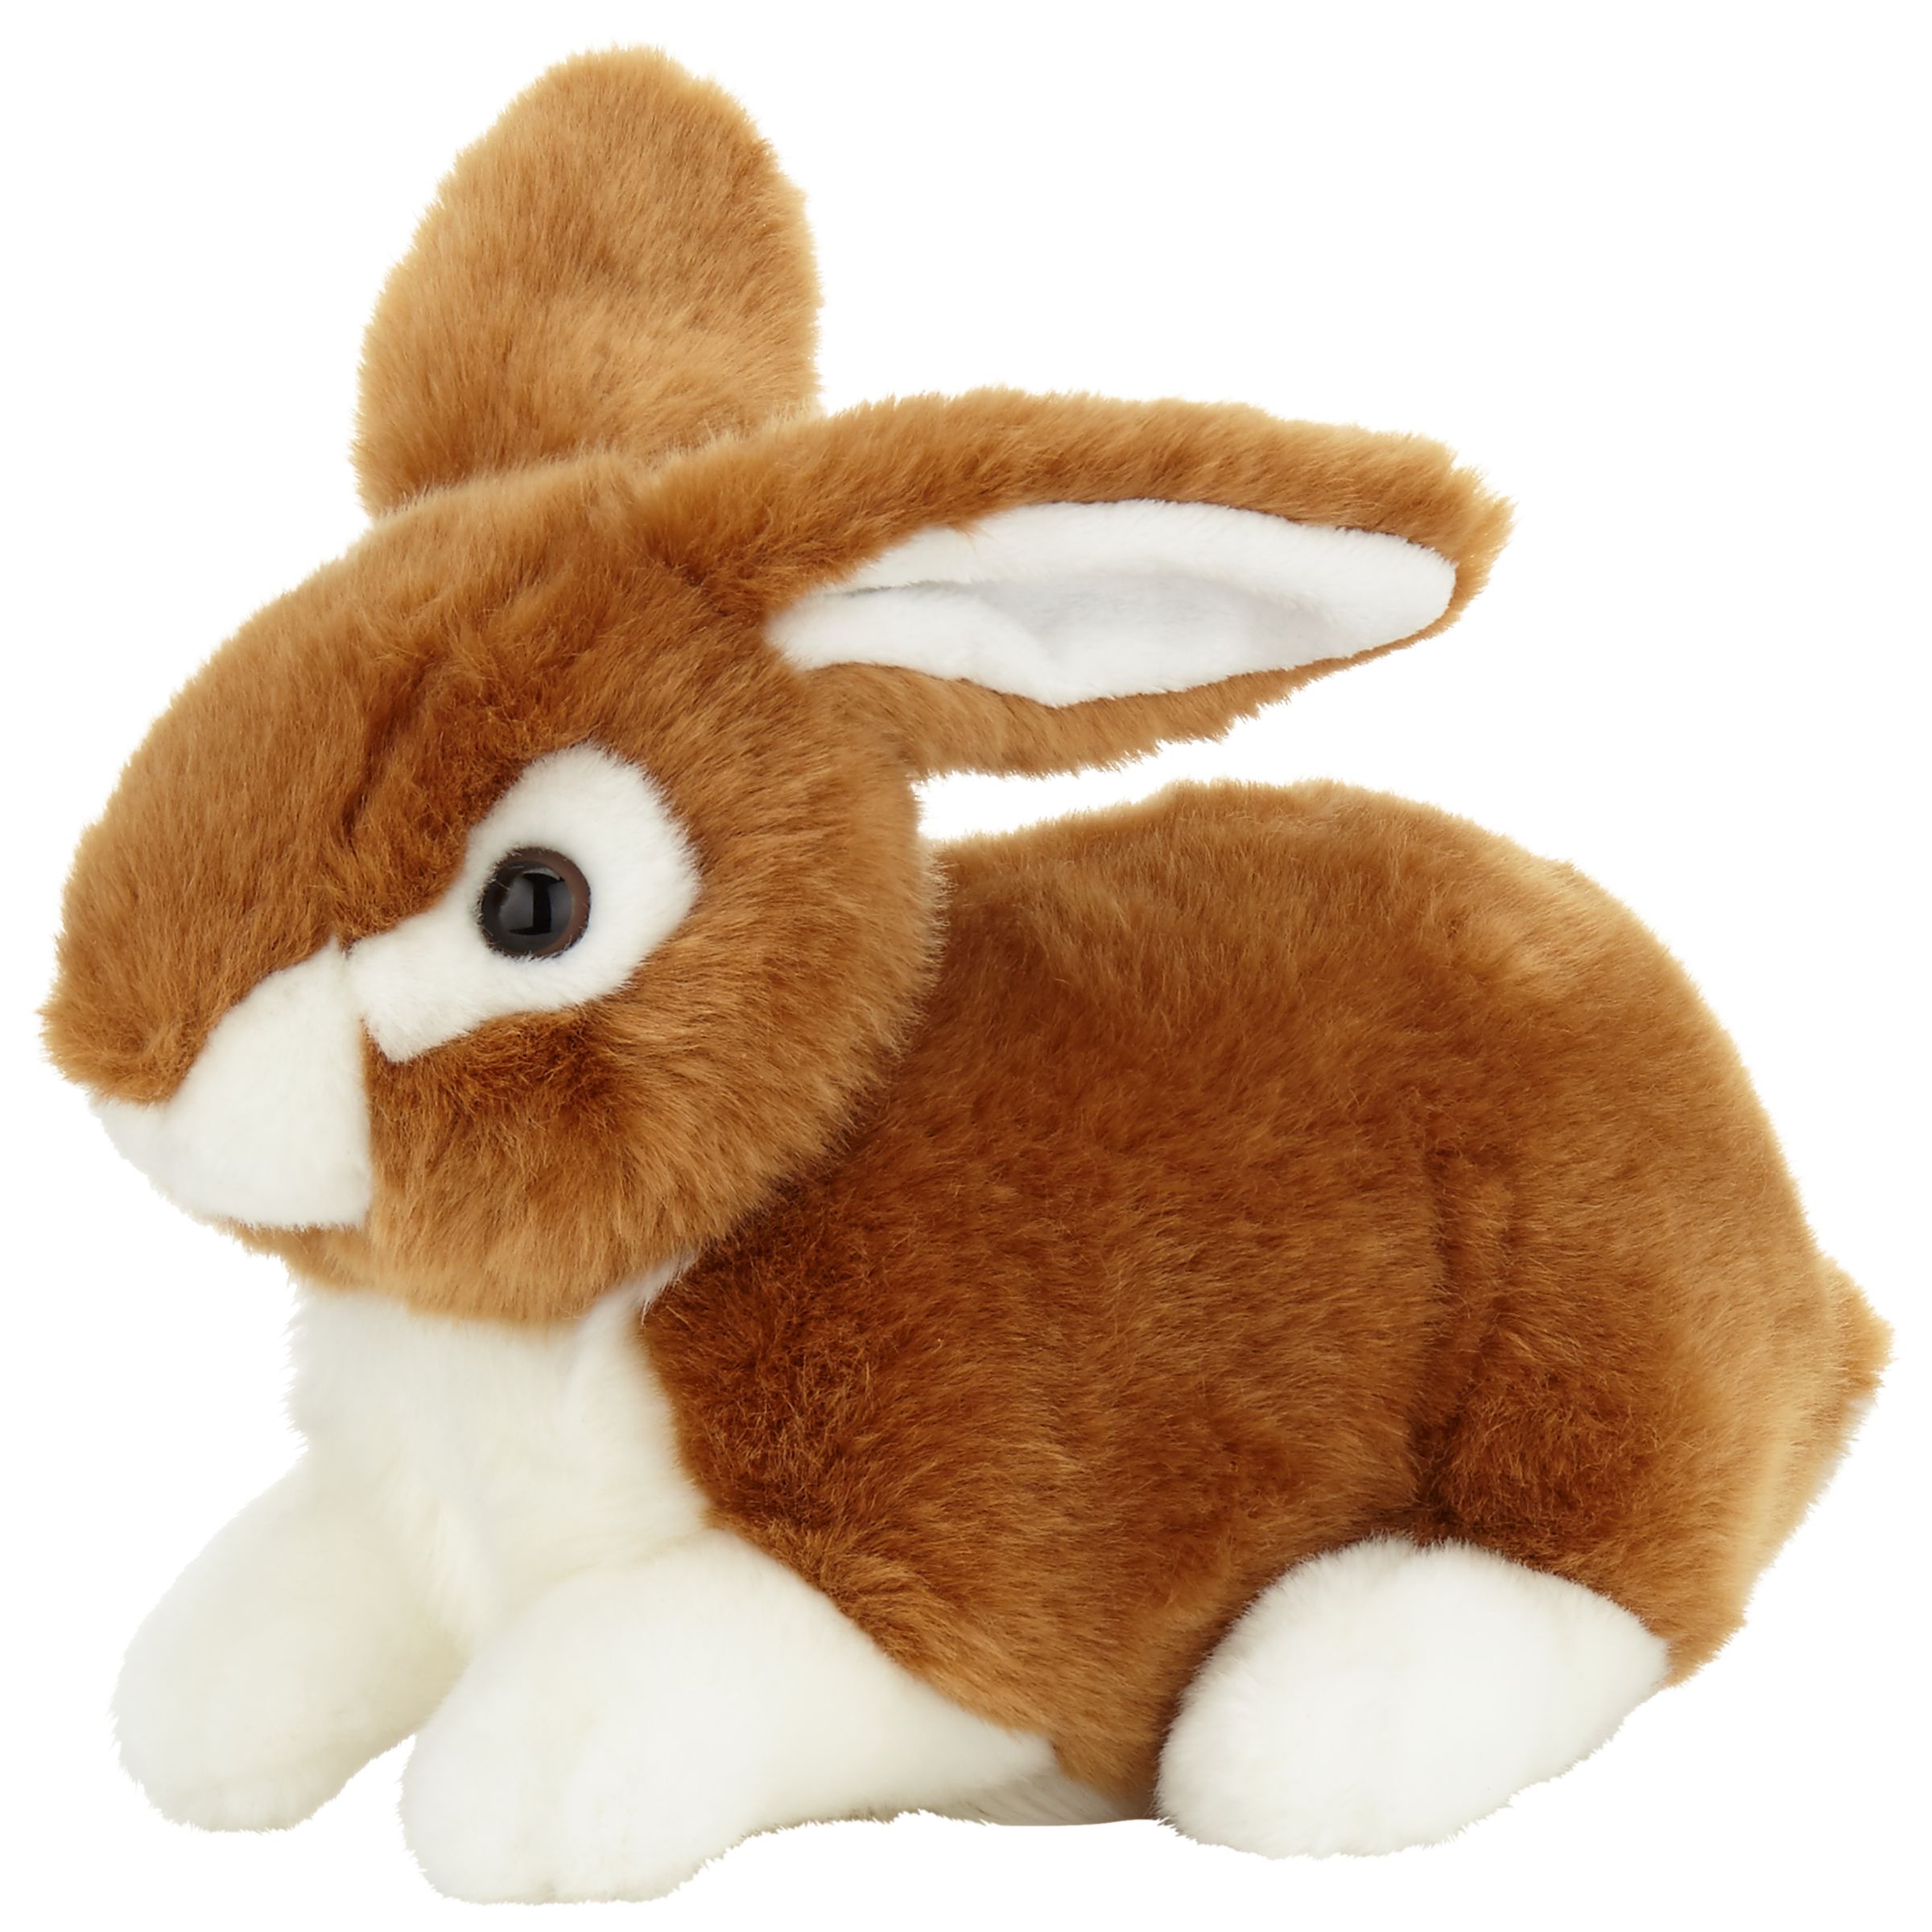 rabbit cuddly toy